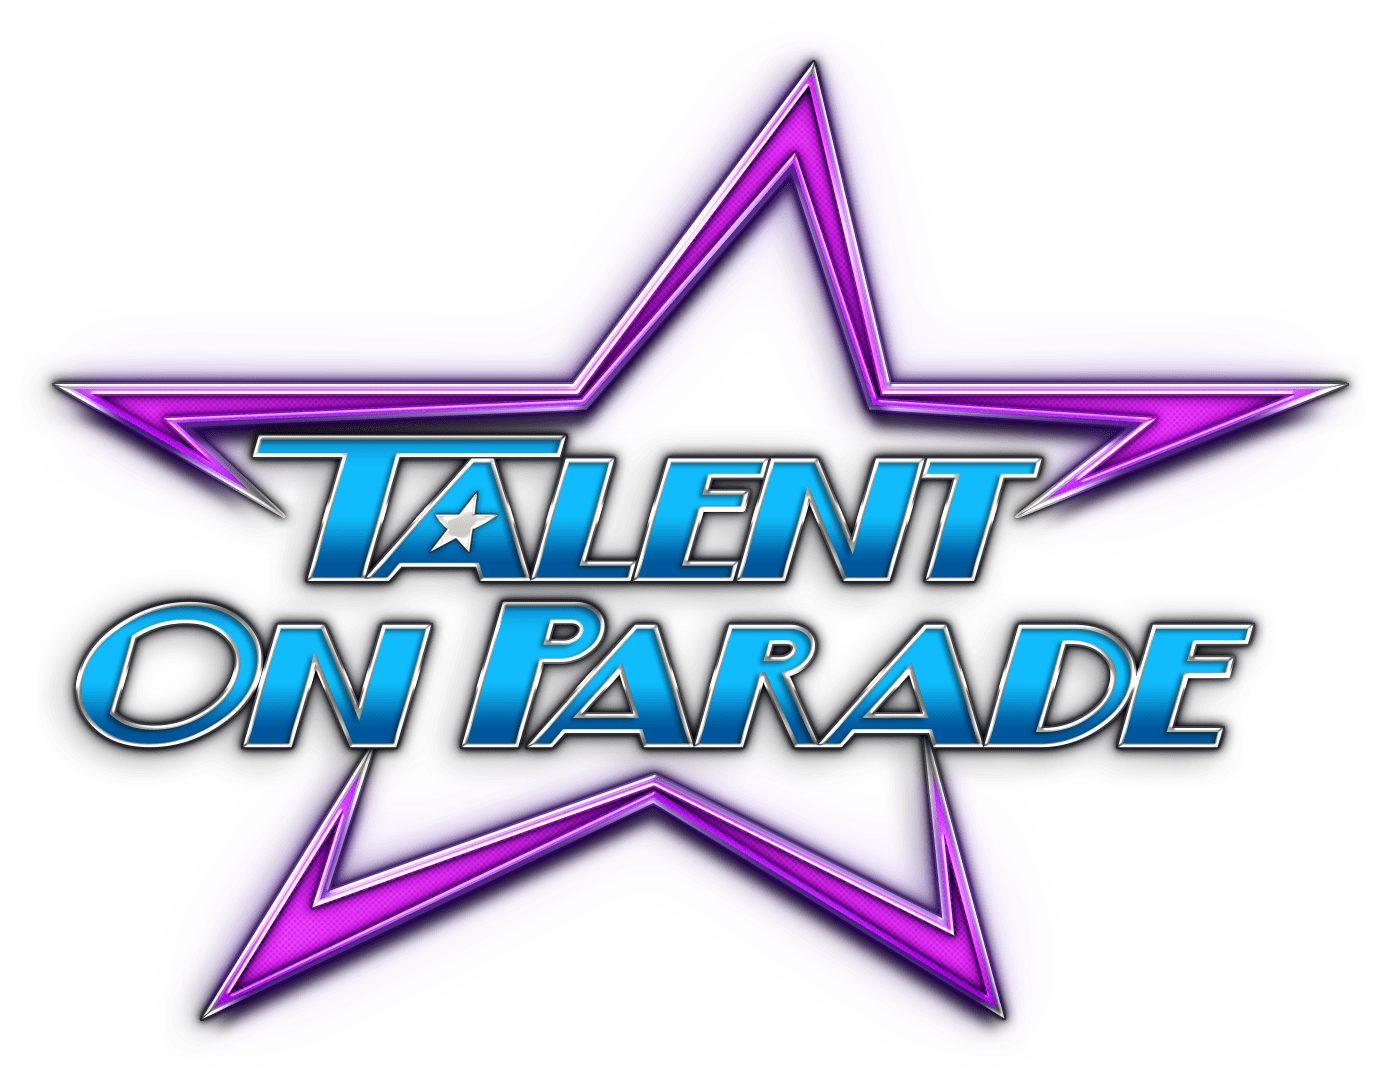 www.talentonparade